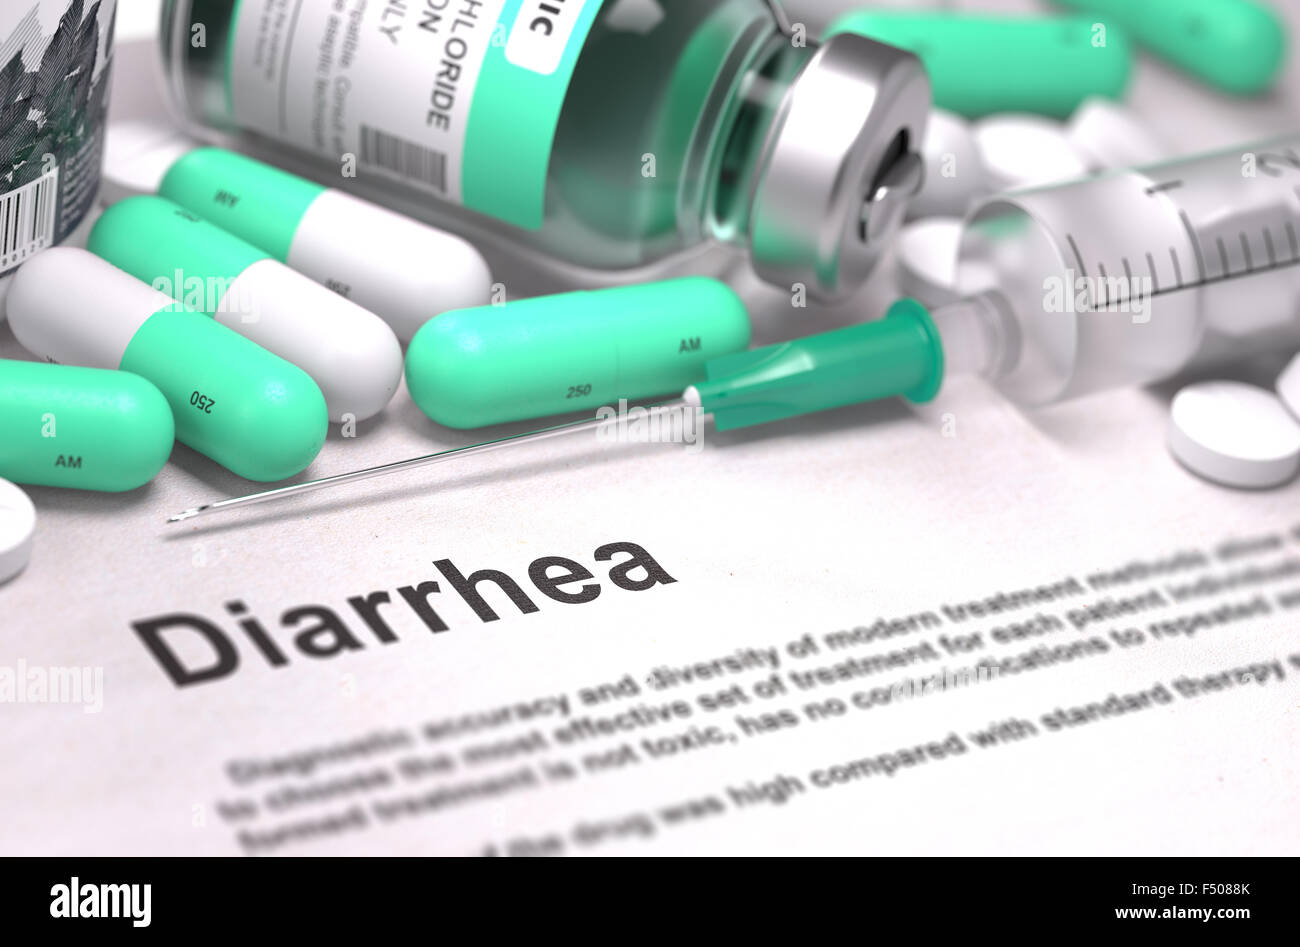 Diagnóstico - la diarrea. Concepto médico con fondo borroso. Foto de stock